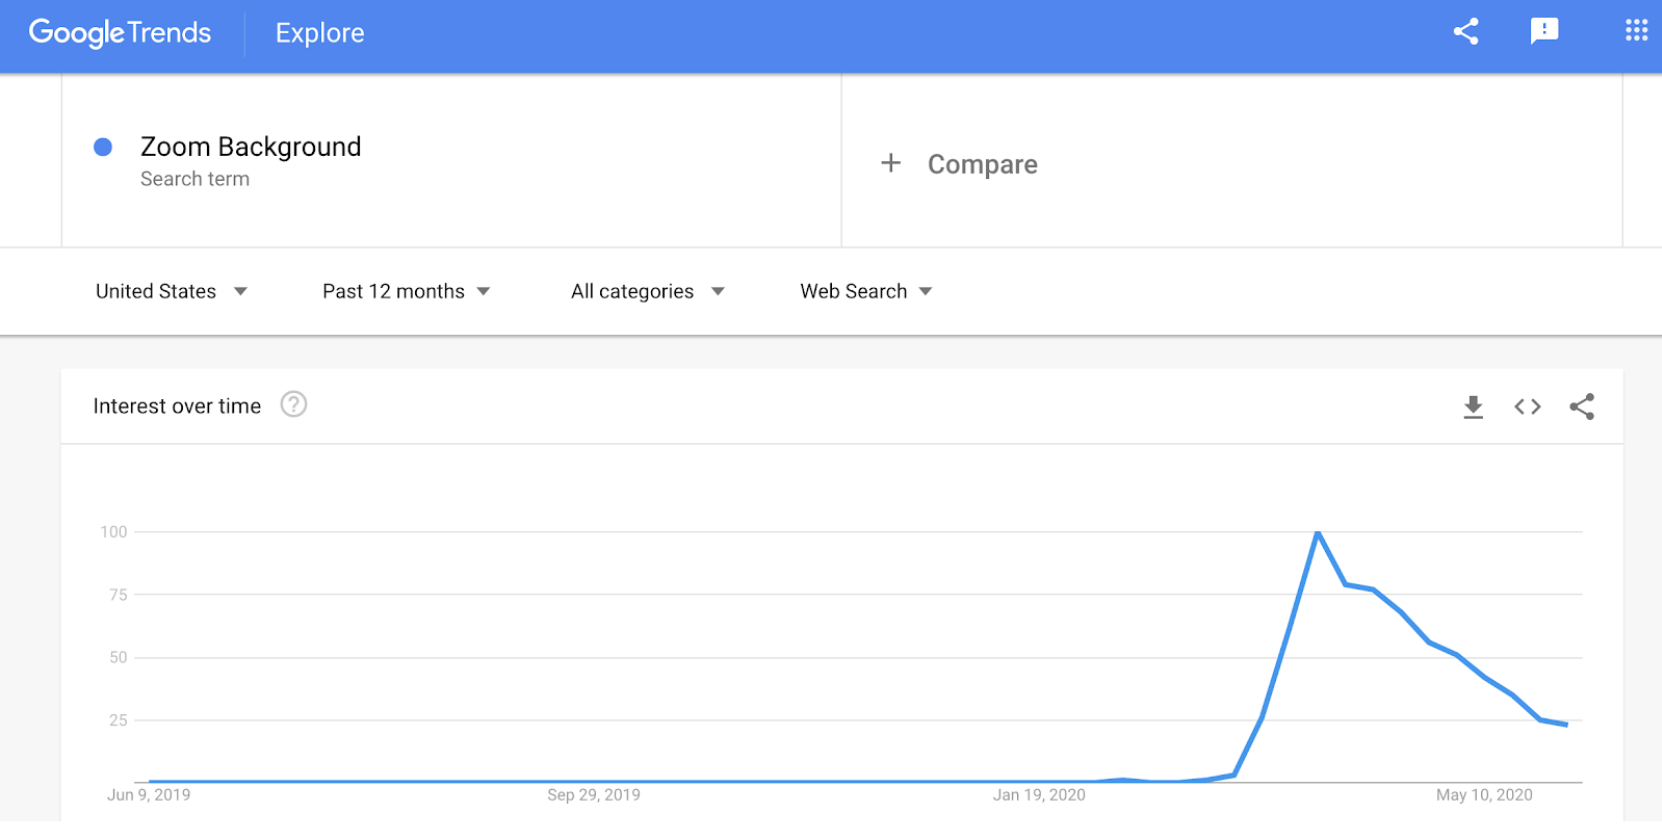 Google Trends - Zoom Background - Top4 Marketing